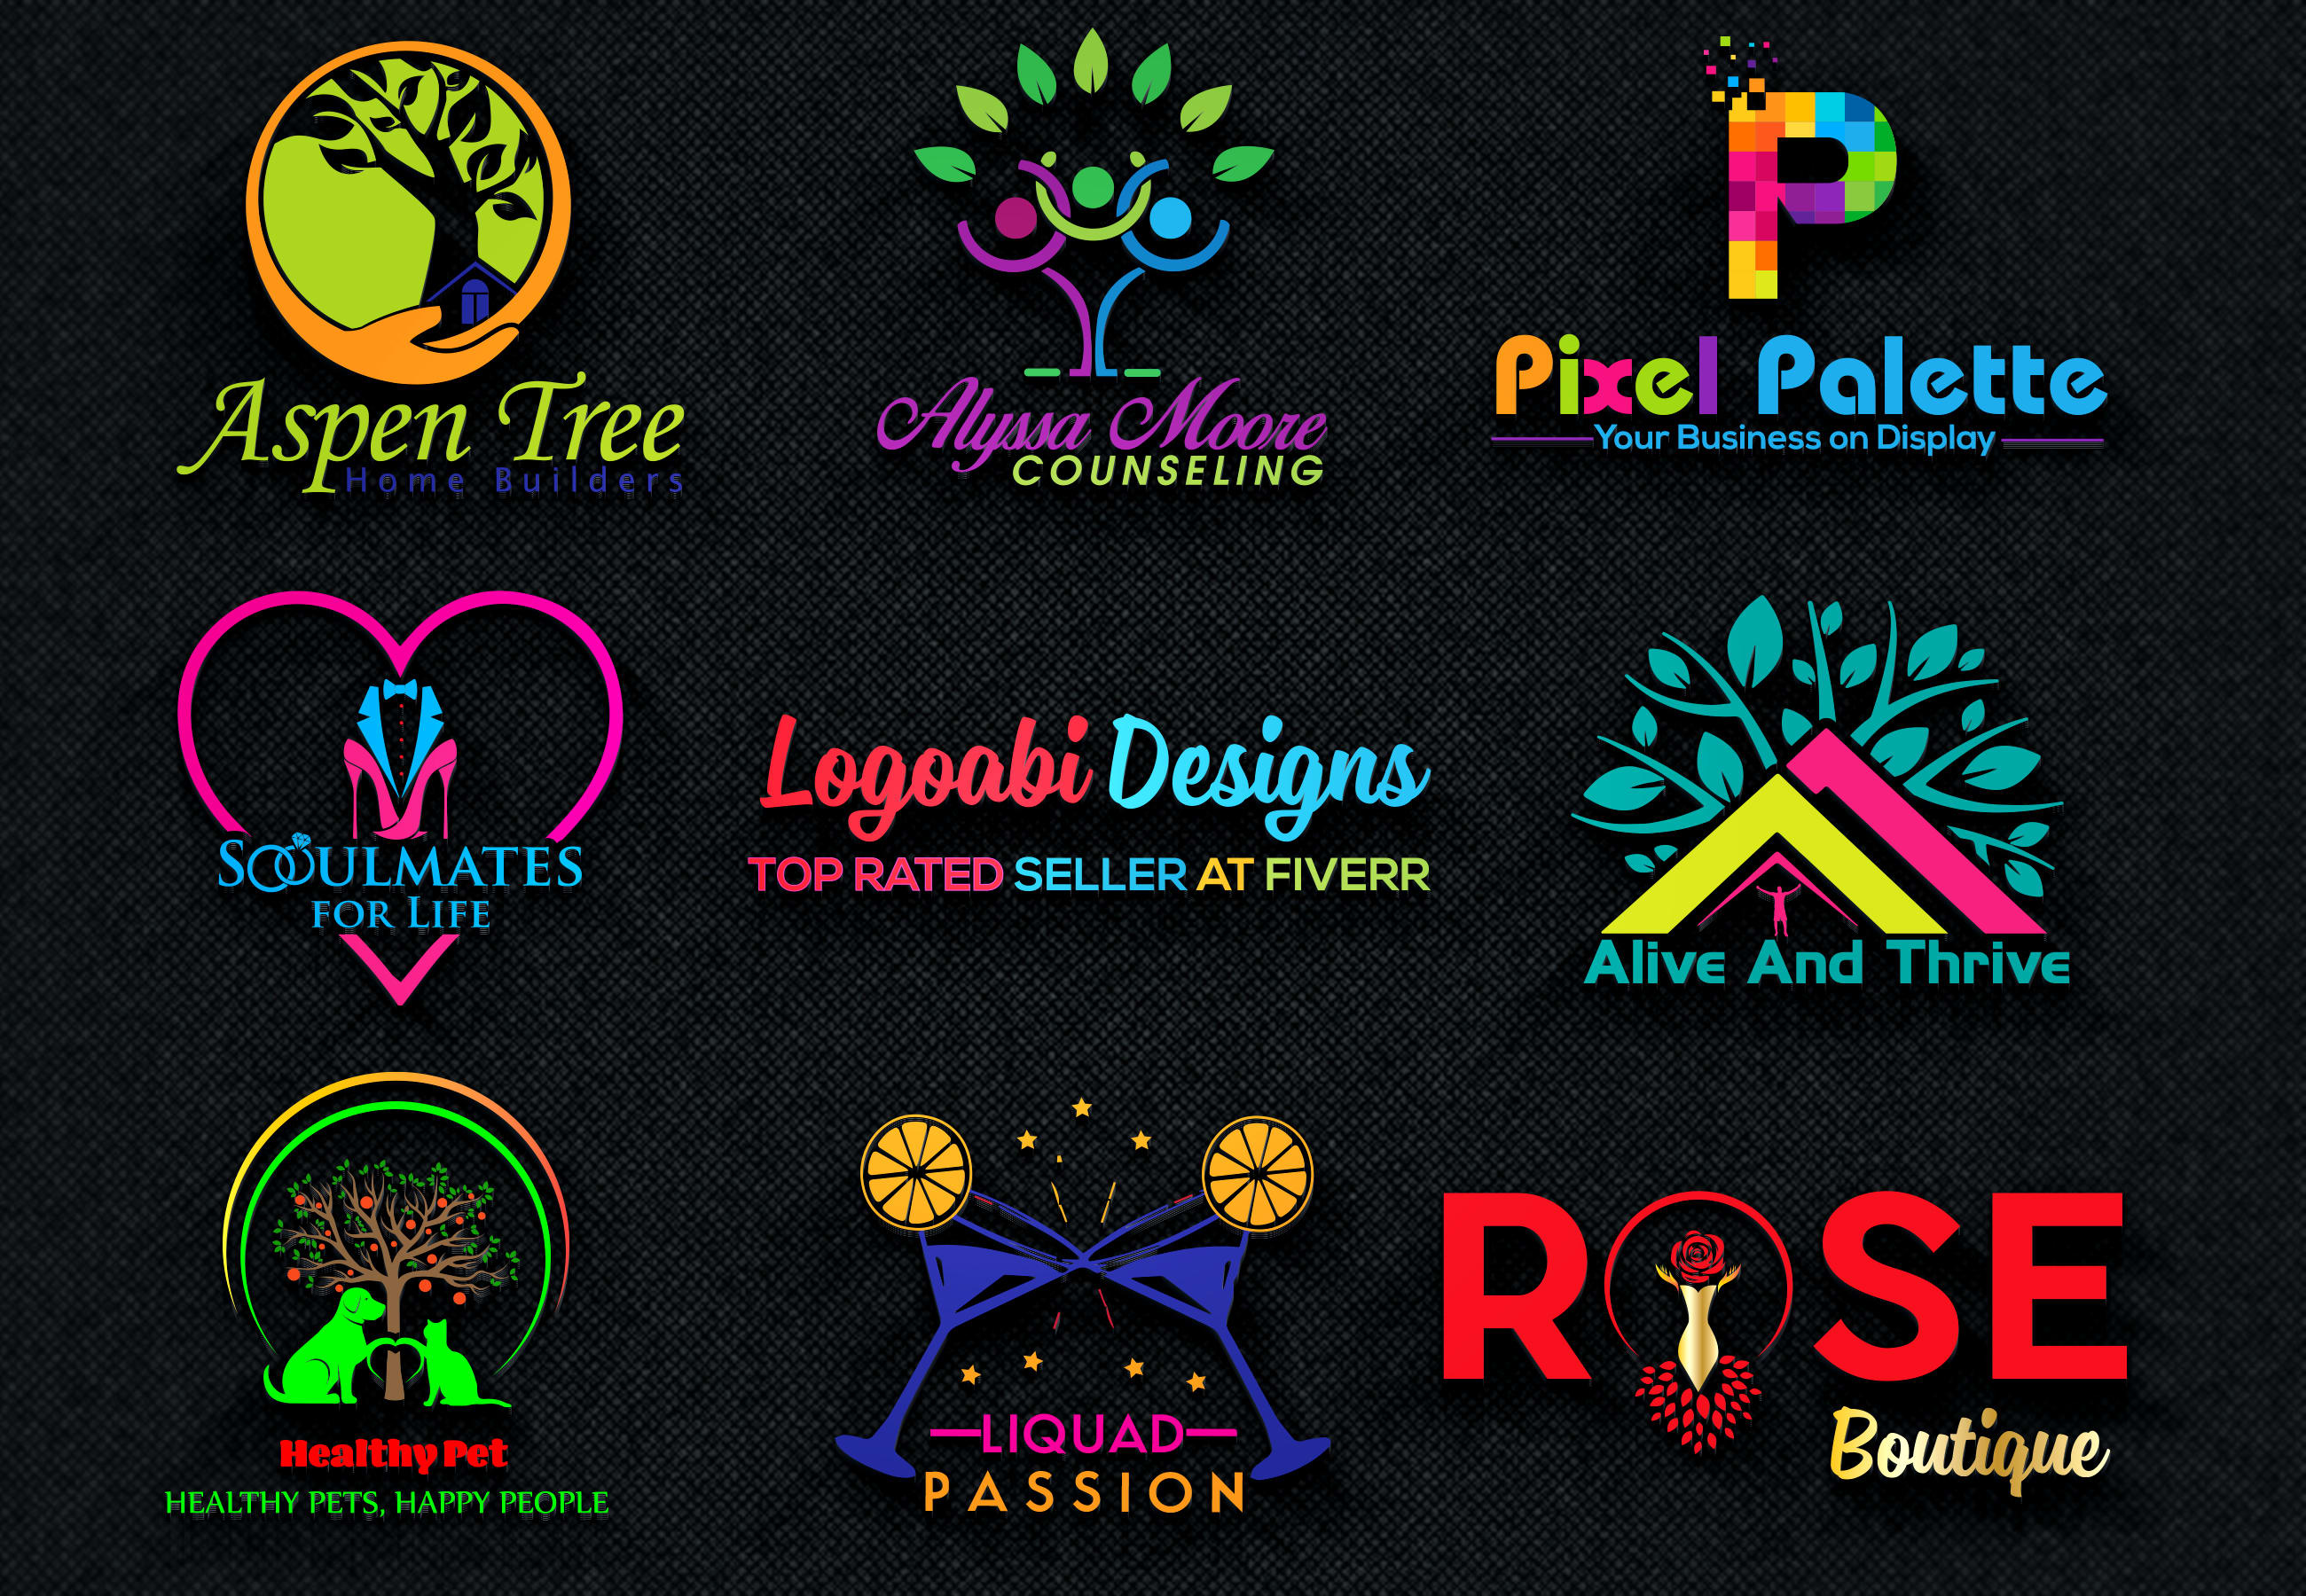 Fiverr Logo Design Discount - Fiverr Logo Designs